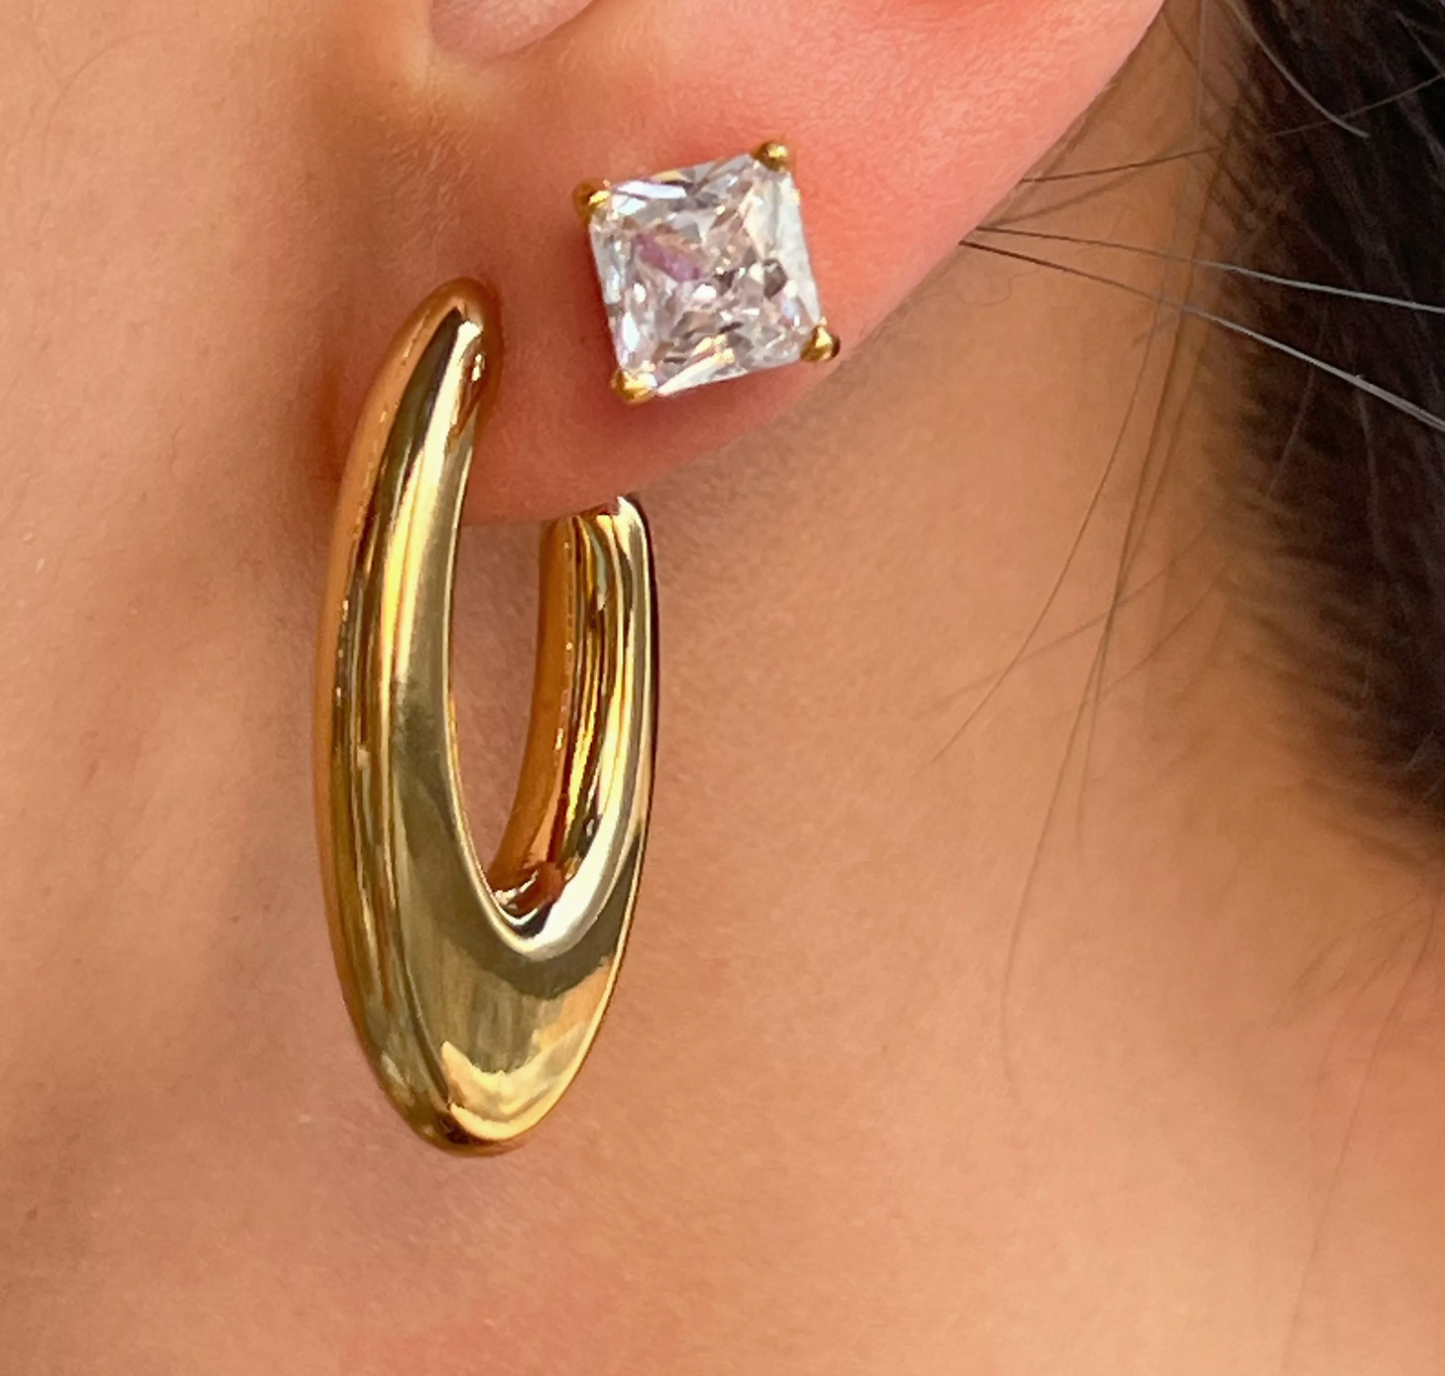 Beautiful Imperfection - Geometric Earrings